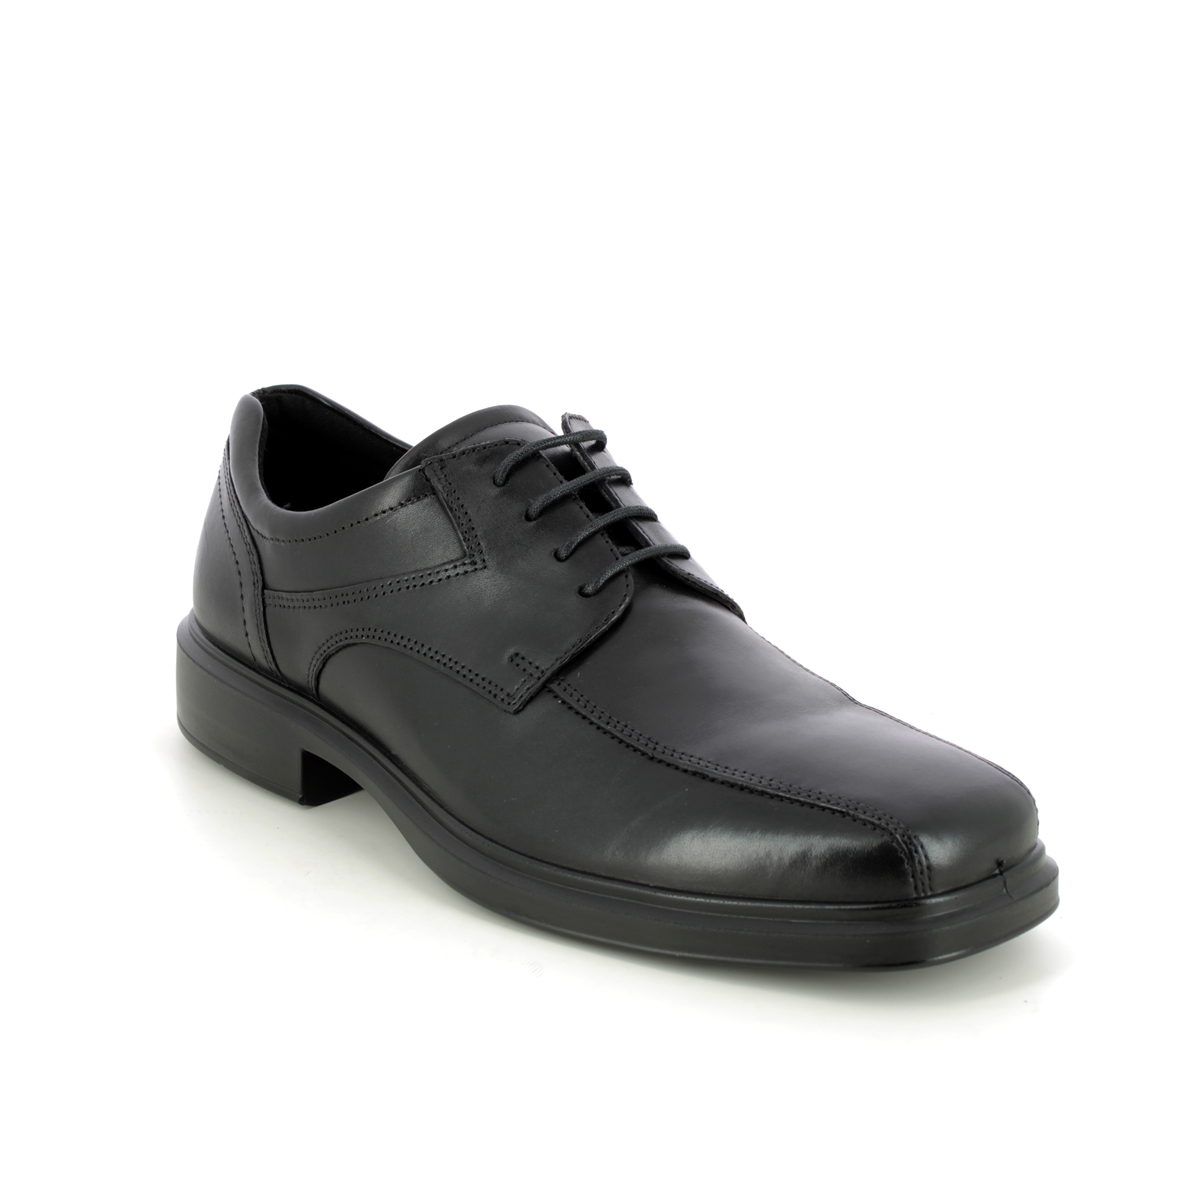 Ecco Helsinki 2 Tram Black Leather Mens Formal Shoes 500174-01001 In Size 46 In Plain Black Leather